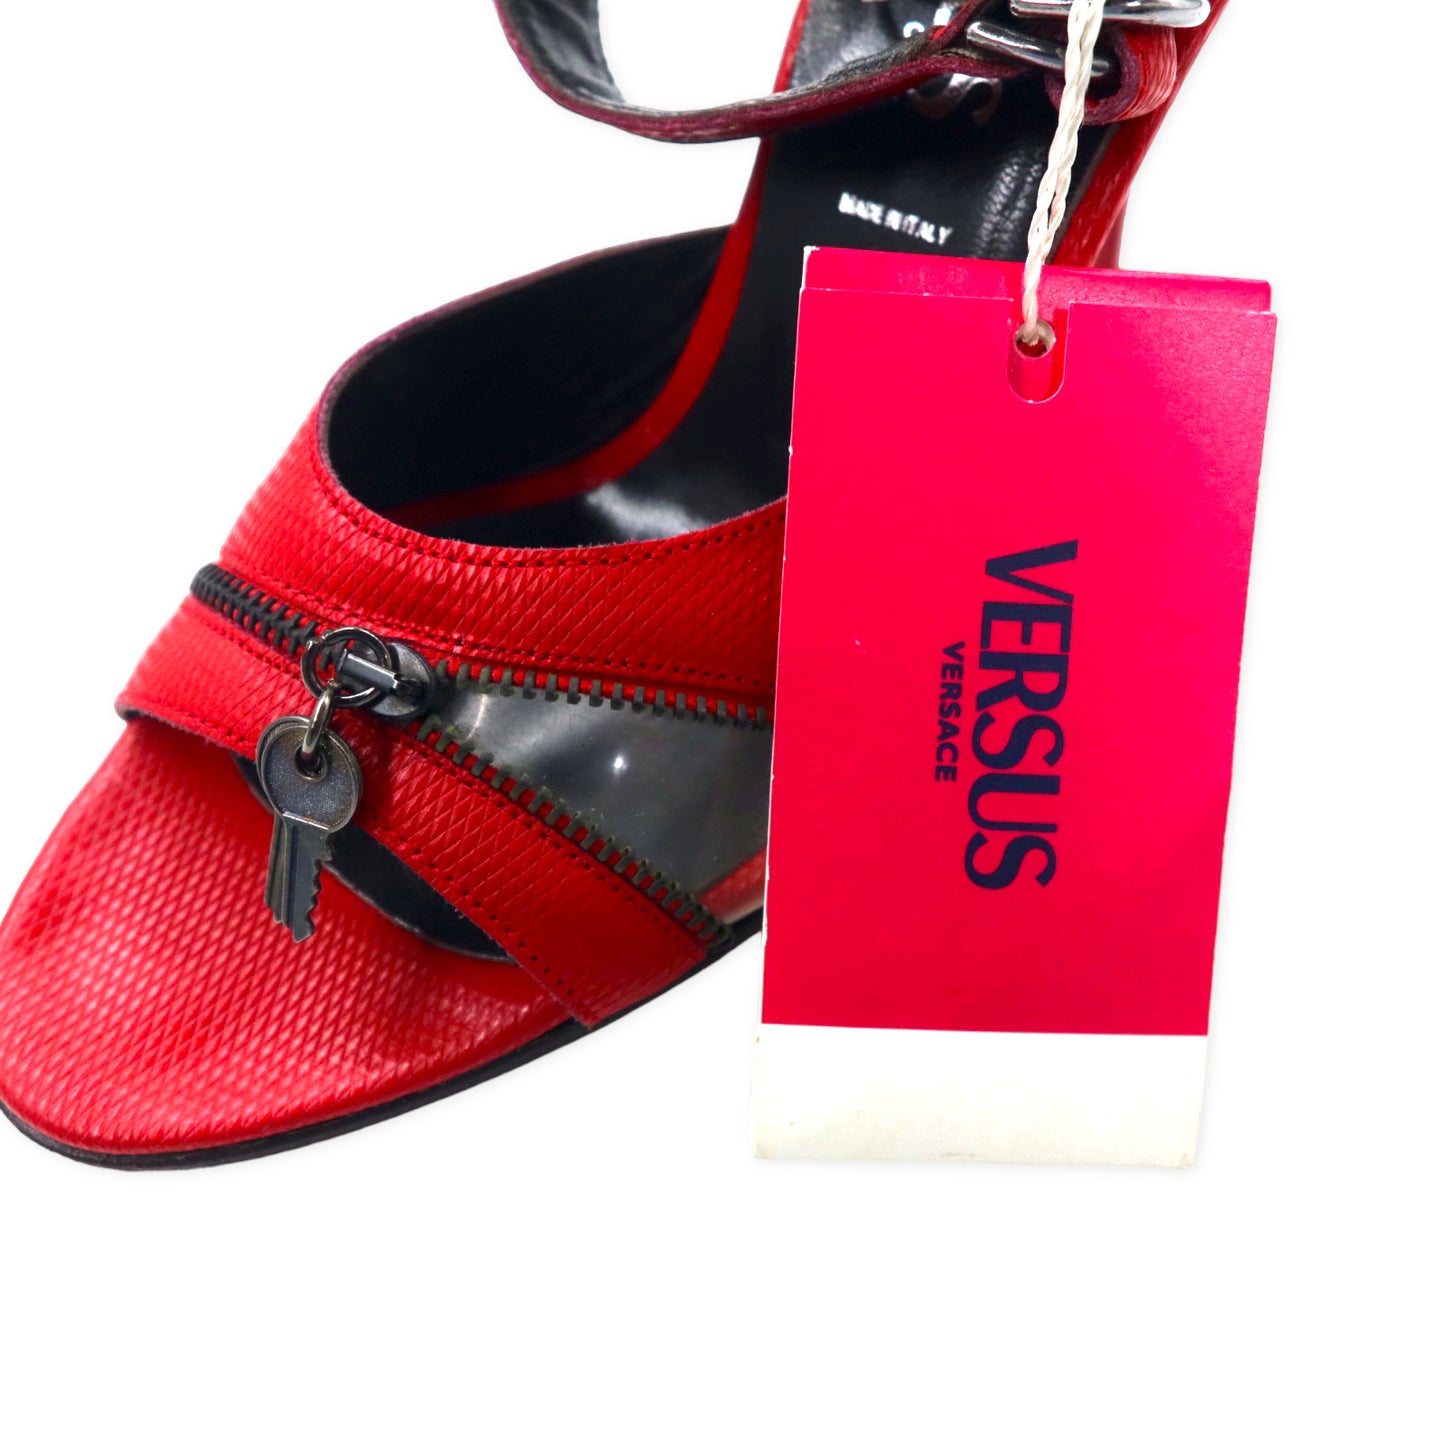 VERSUS VERSACE Zip Design Pin Heal Sandal Pumps US6.5 Red Leather